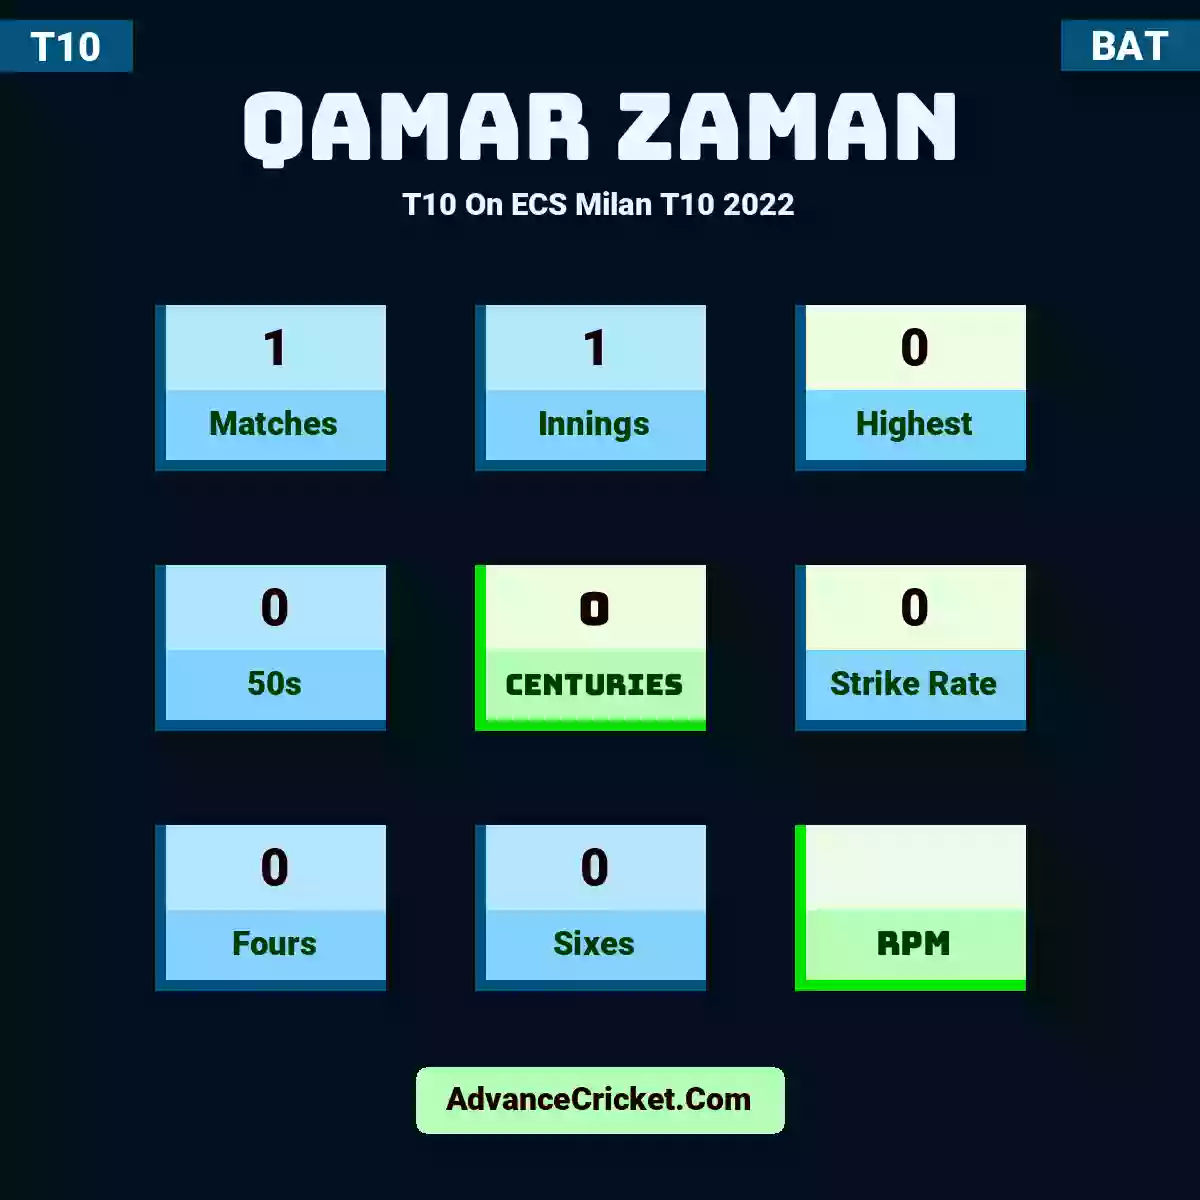 Qamar Zaman T10  On ECS Milan T10 2022, Qamar Zaman played 1 matches, scored 0 runs as highest, 0 half-centuries, and 0 centuries, with a strike rate of 0. Q.Zaman hit 0 fours and 0 sixes.